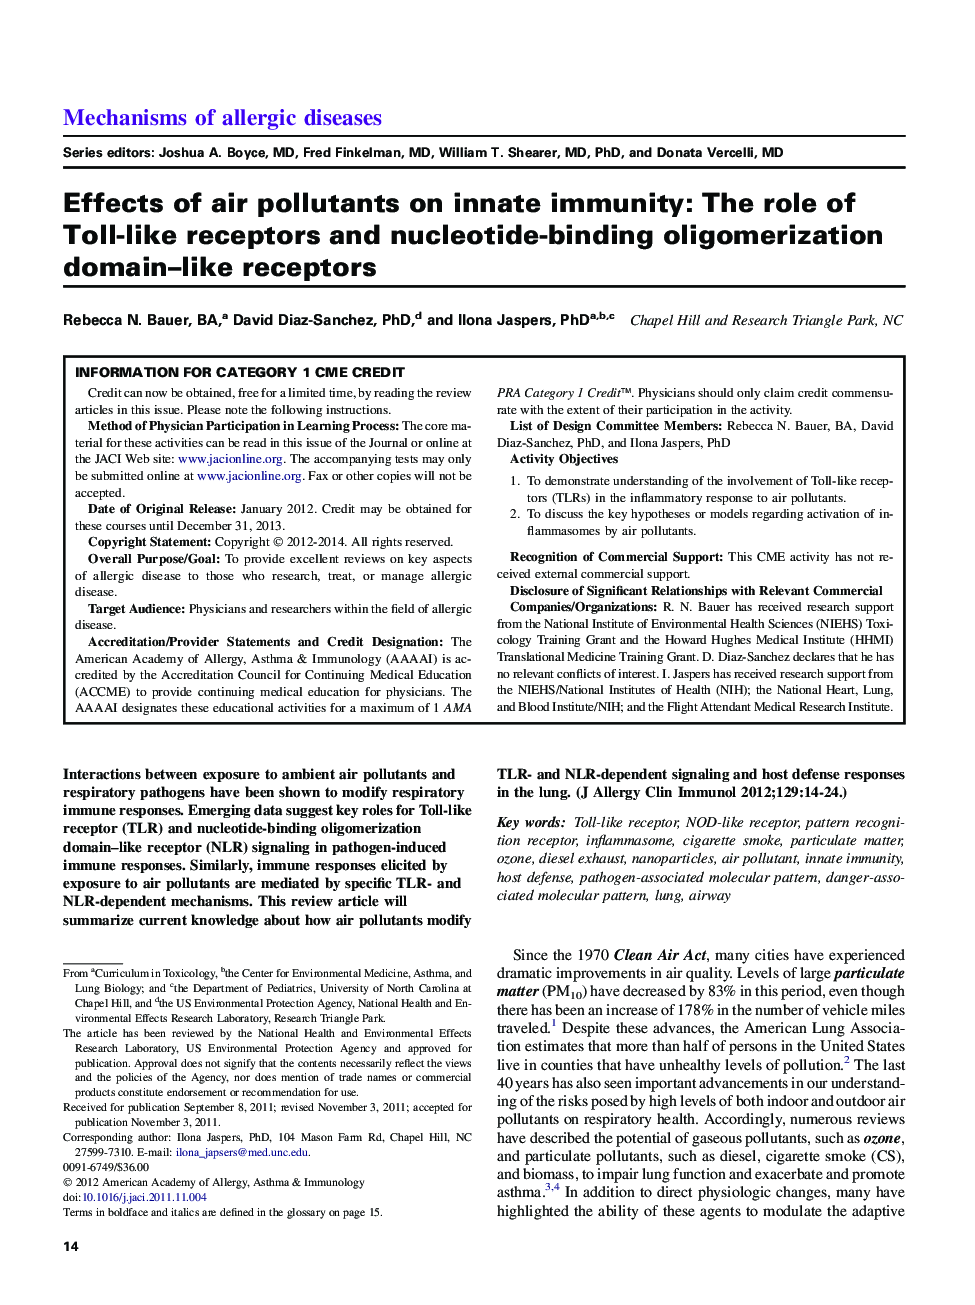 Effects of air pollutants on innate immunity: The role of Toll-like receptors and nucleotide-binding oligomerization domain–like receptors 